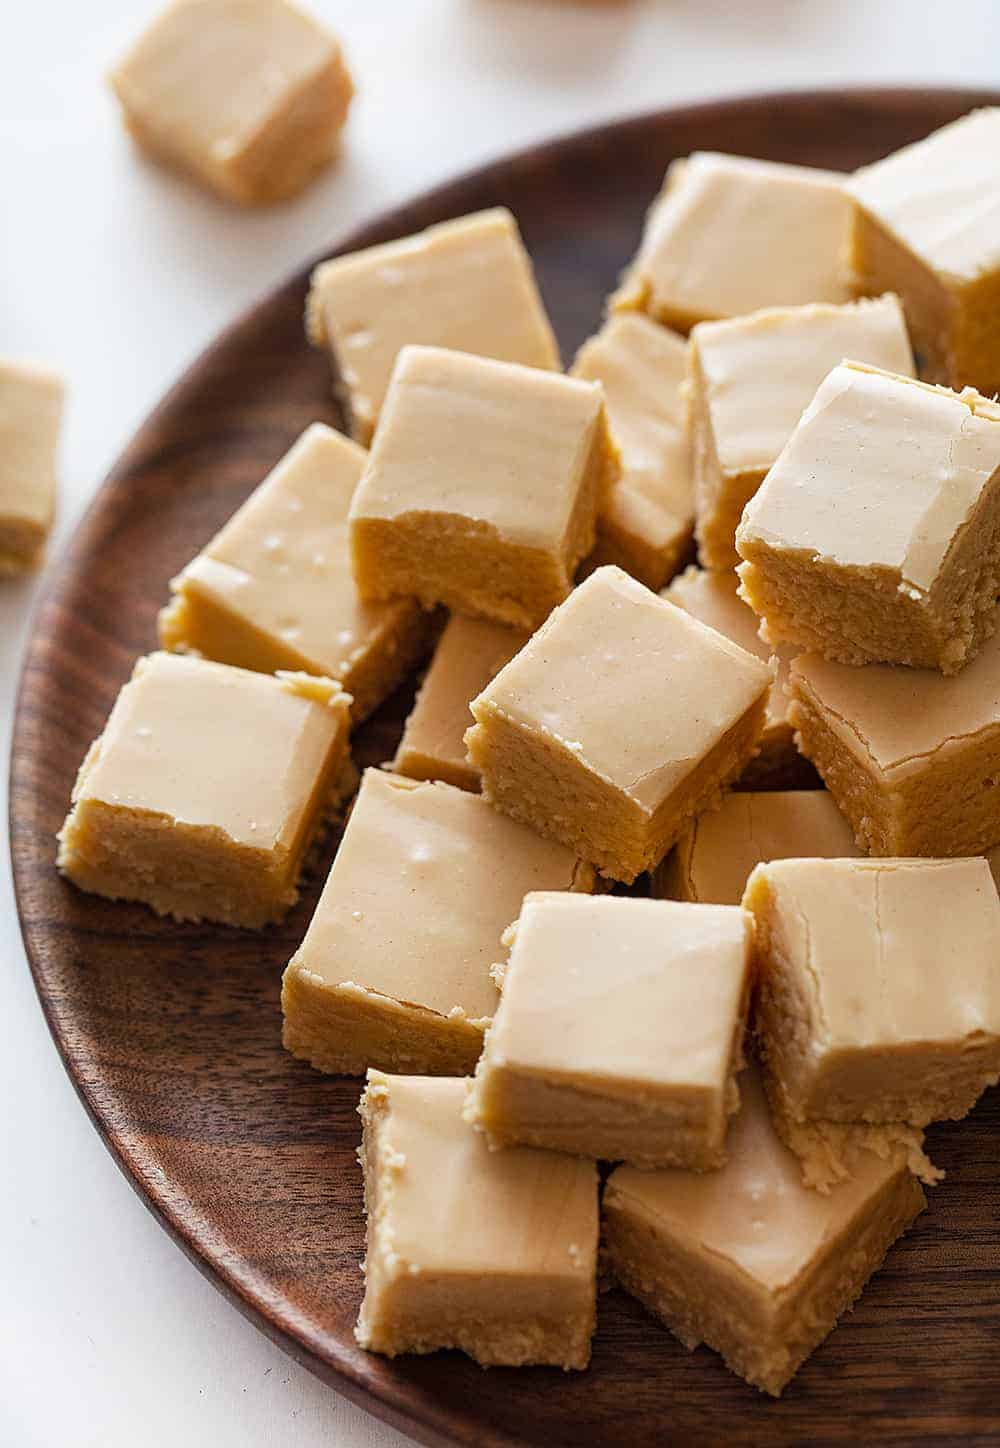 Creamy Peanut Fudge Pieces on a Wood Plate